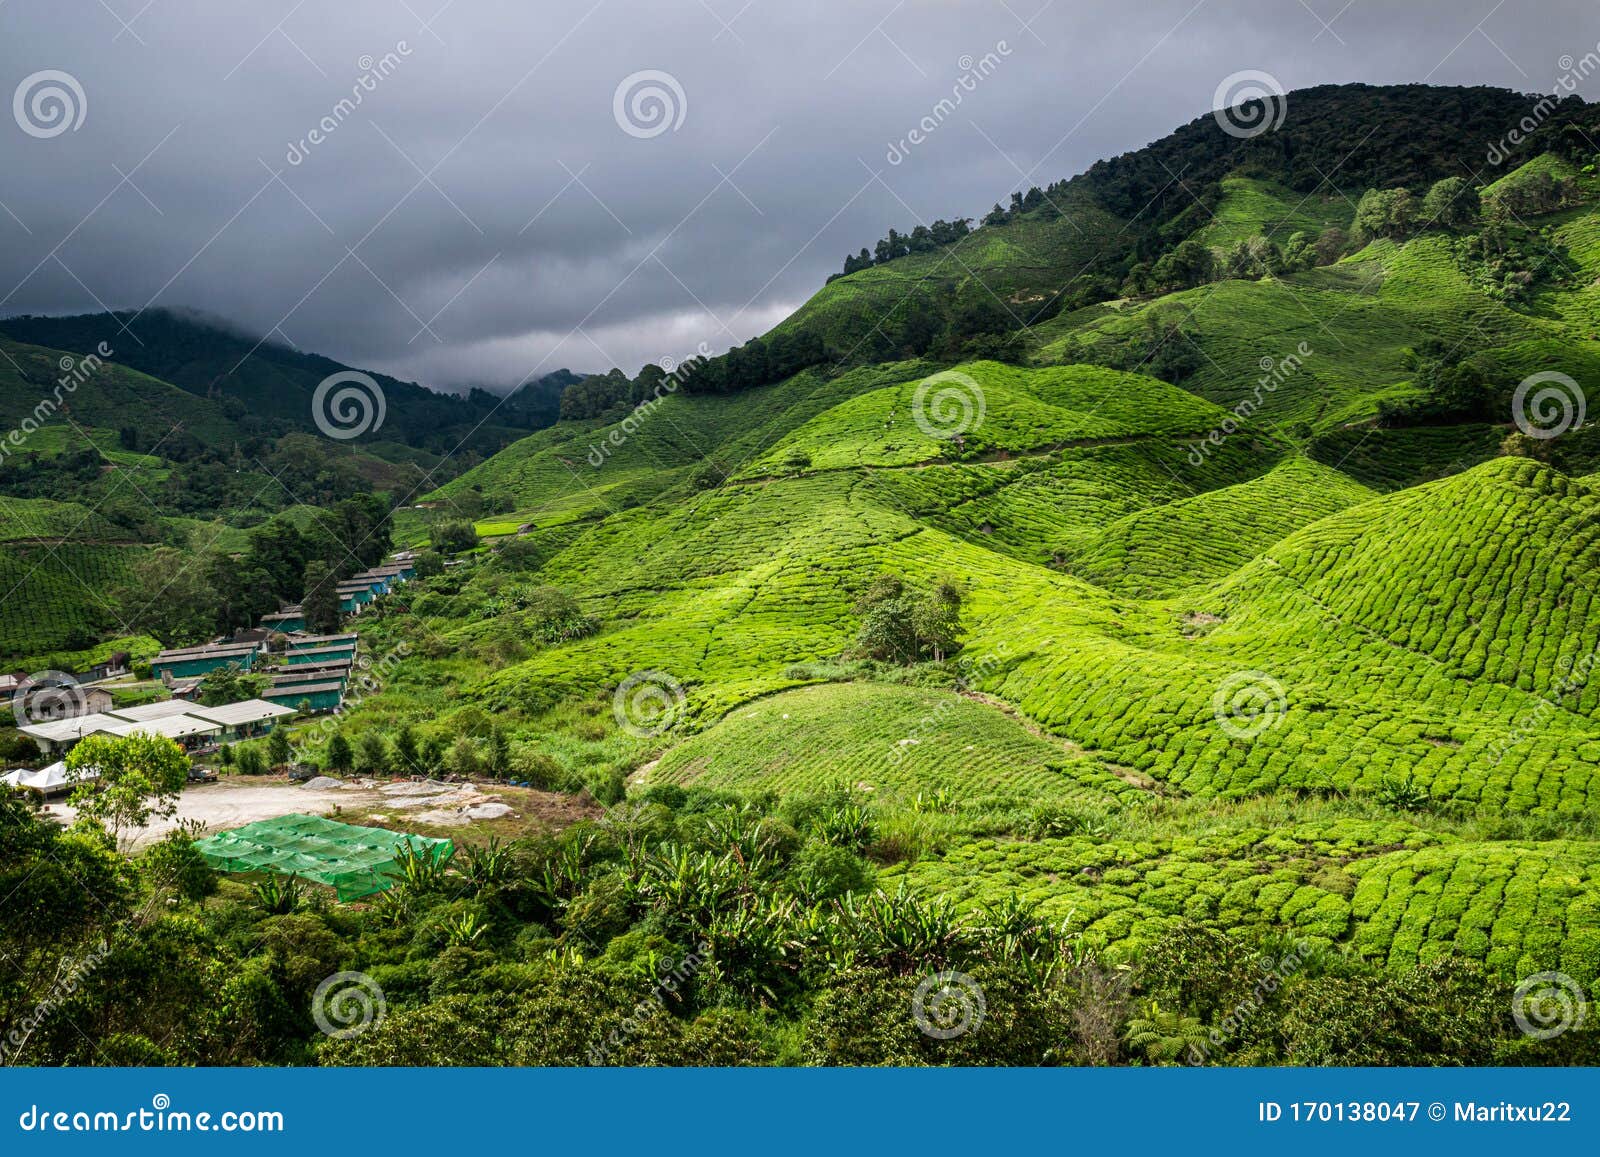 Tanah Rata Tea Plantation In Cameron Highlands, Malaysia ...